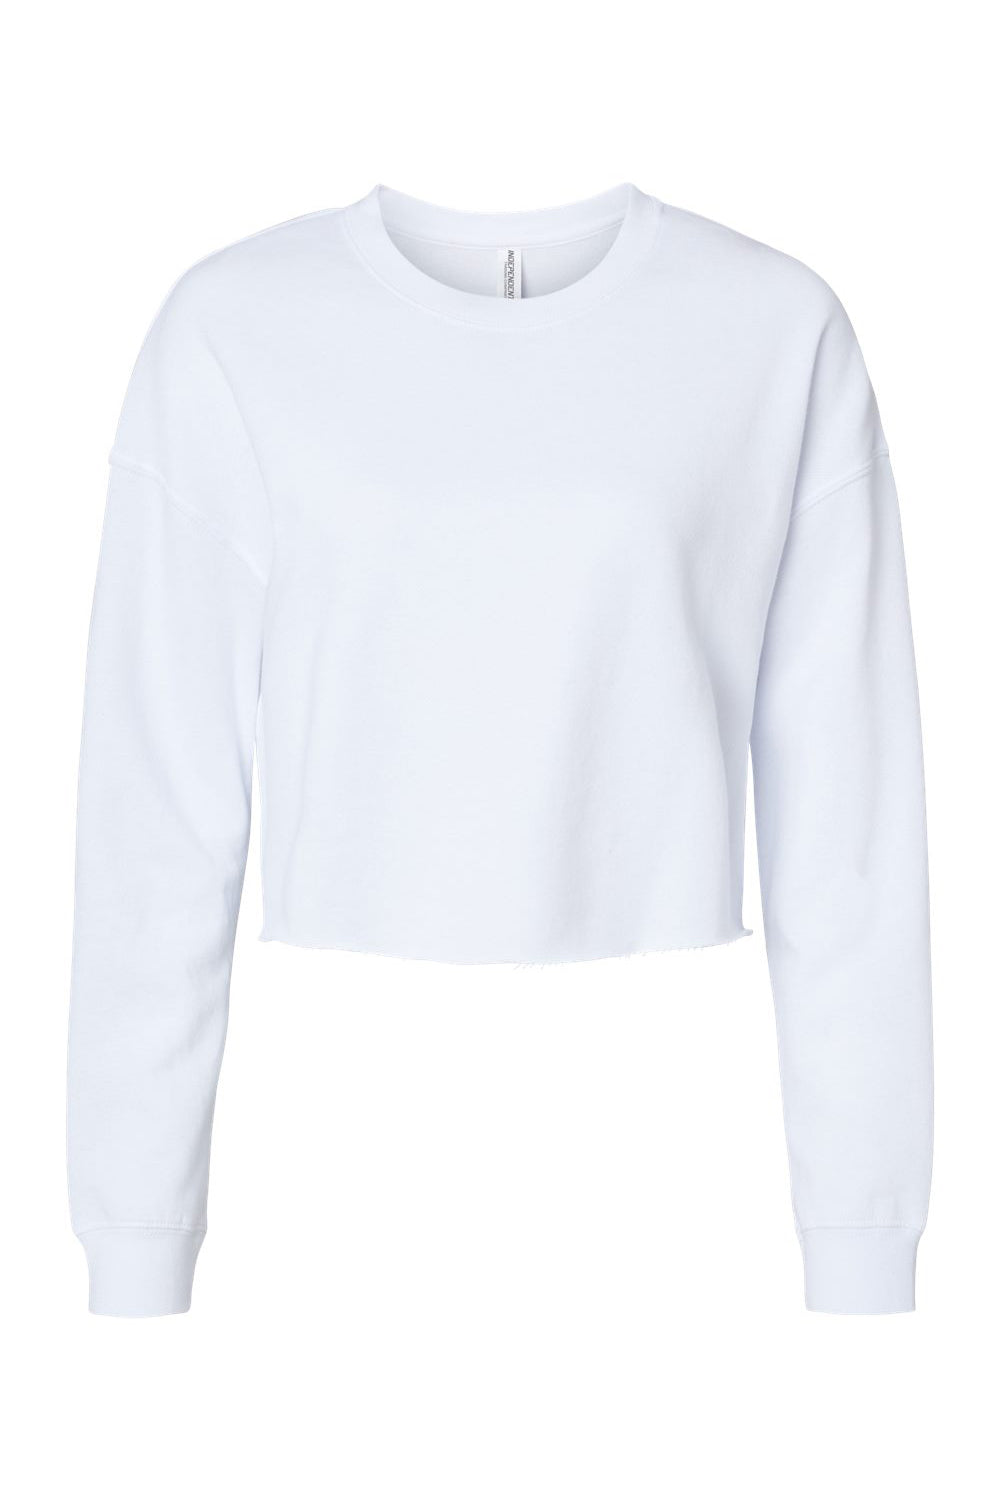 Independent Trading Co. AFX24CRP Womens Crop Crewneck Sweatshirt White Flat Front